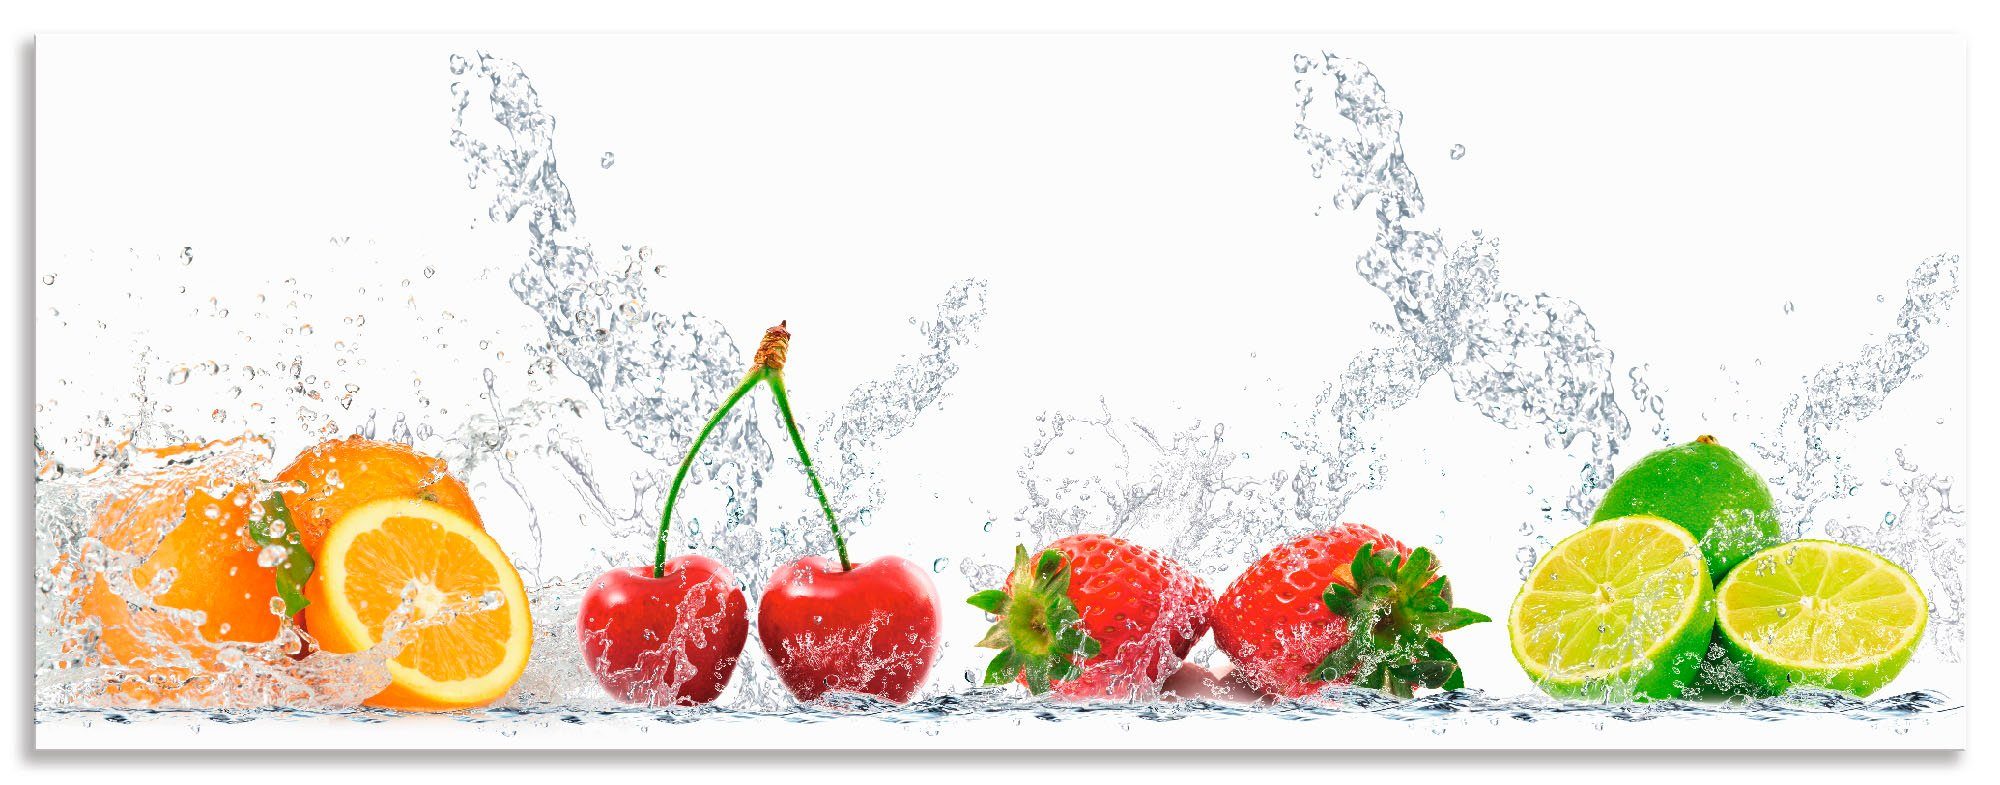 Artland Keukenwand Fruitig verfrissend gezond vruchtenmix zelfklevend in vele maten - spatscherm keuken achter kookplaat en spoelbak als wandbescherming tegen vet, water en vuil -